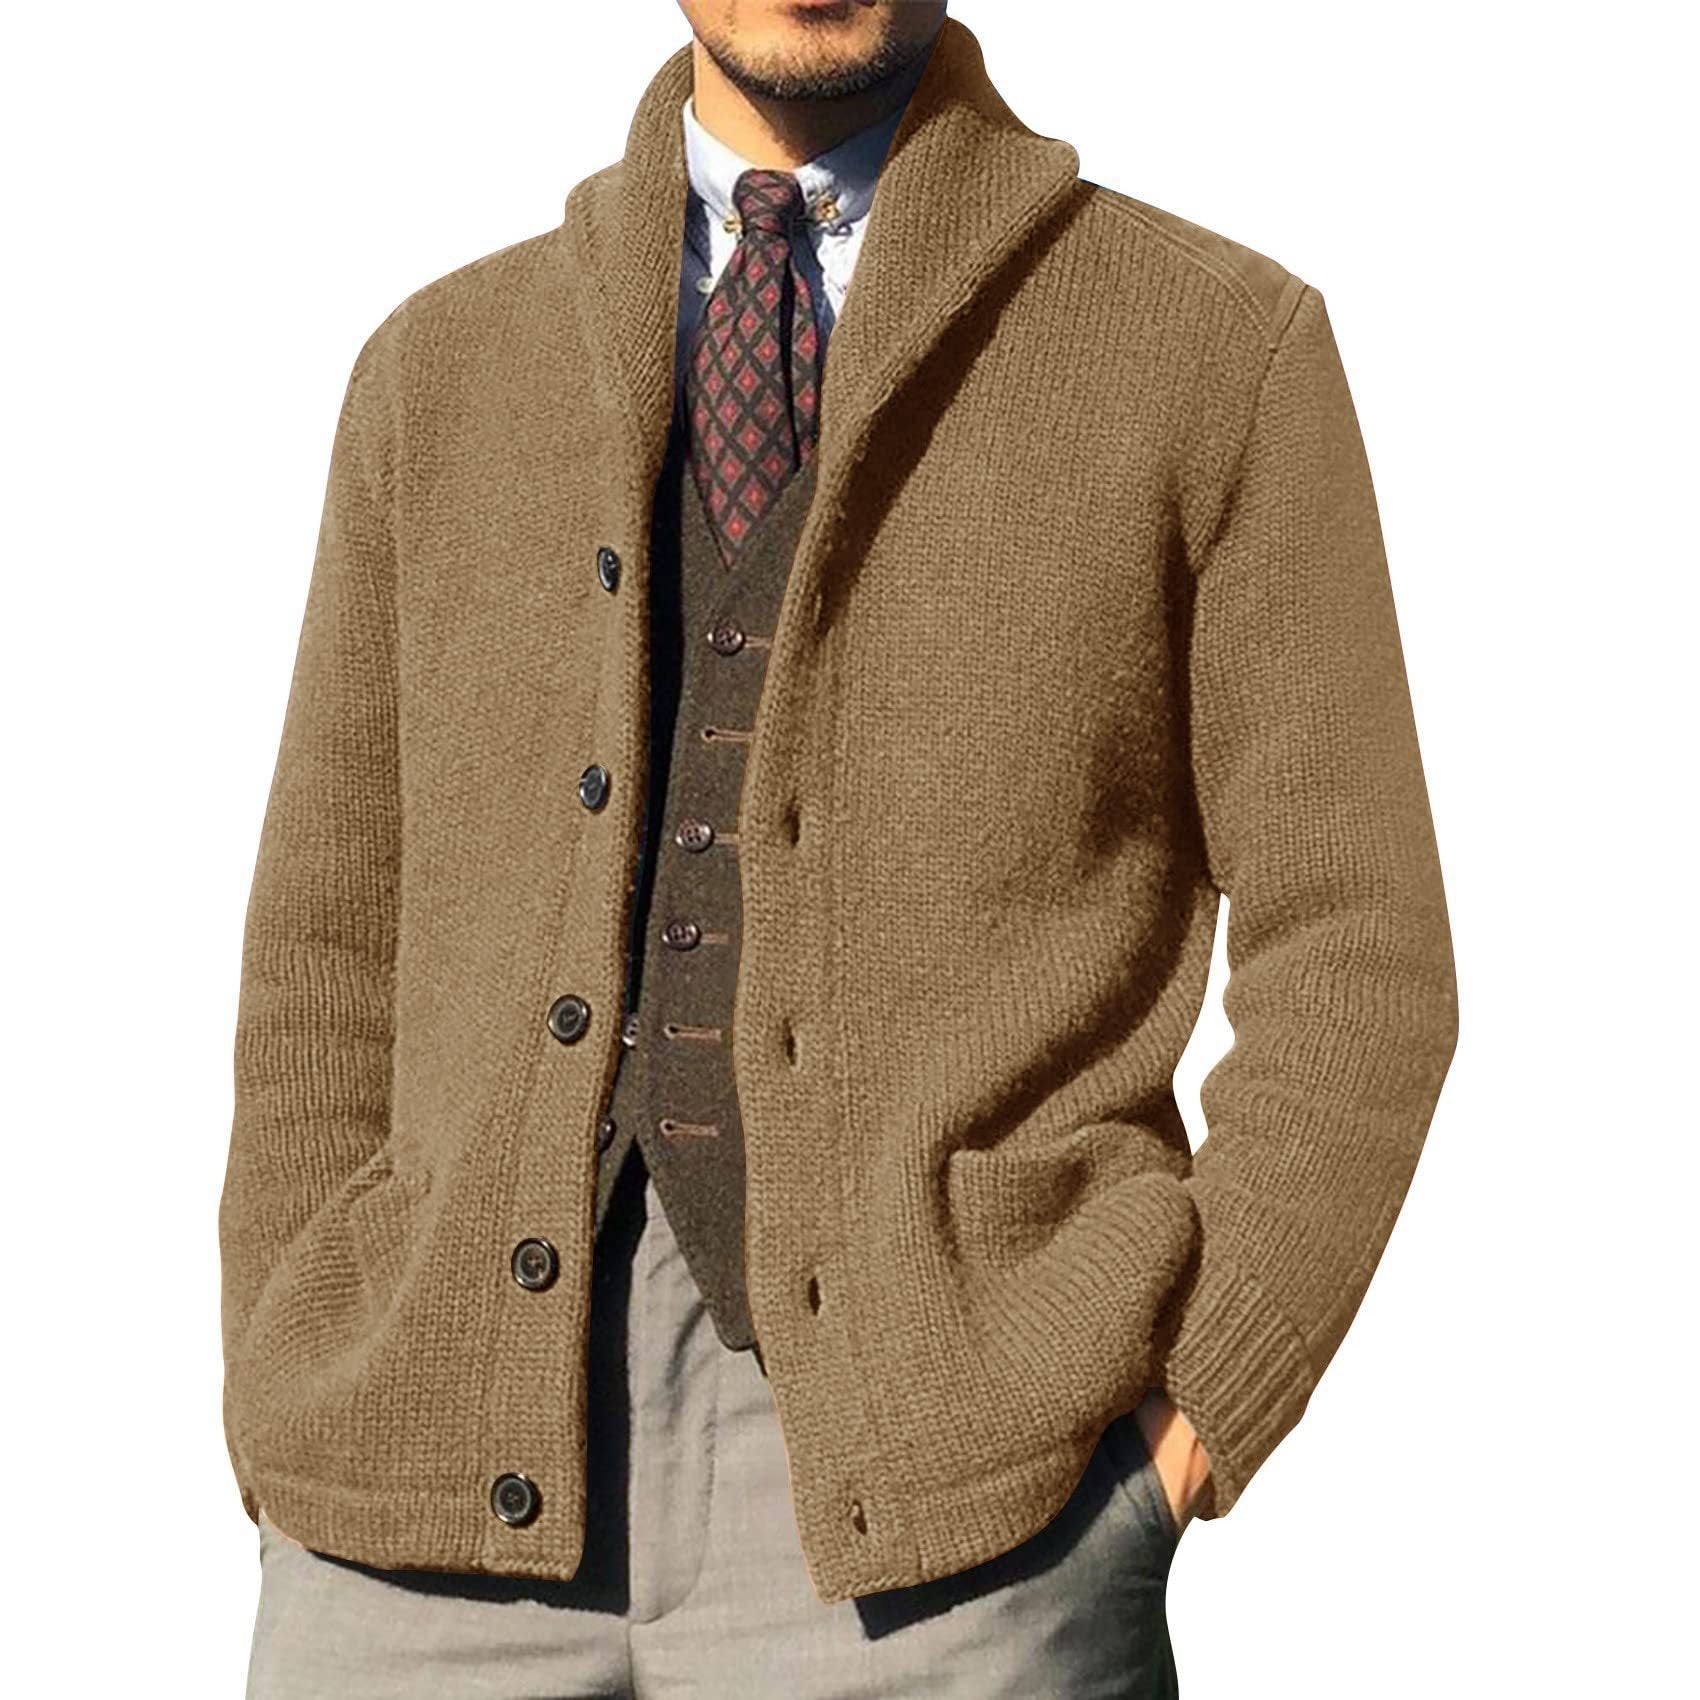 Men's Long Sleeve Sweater - Everyday-Sales.com